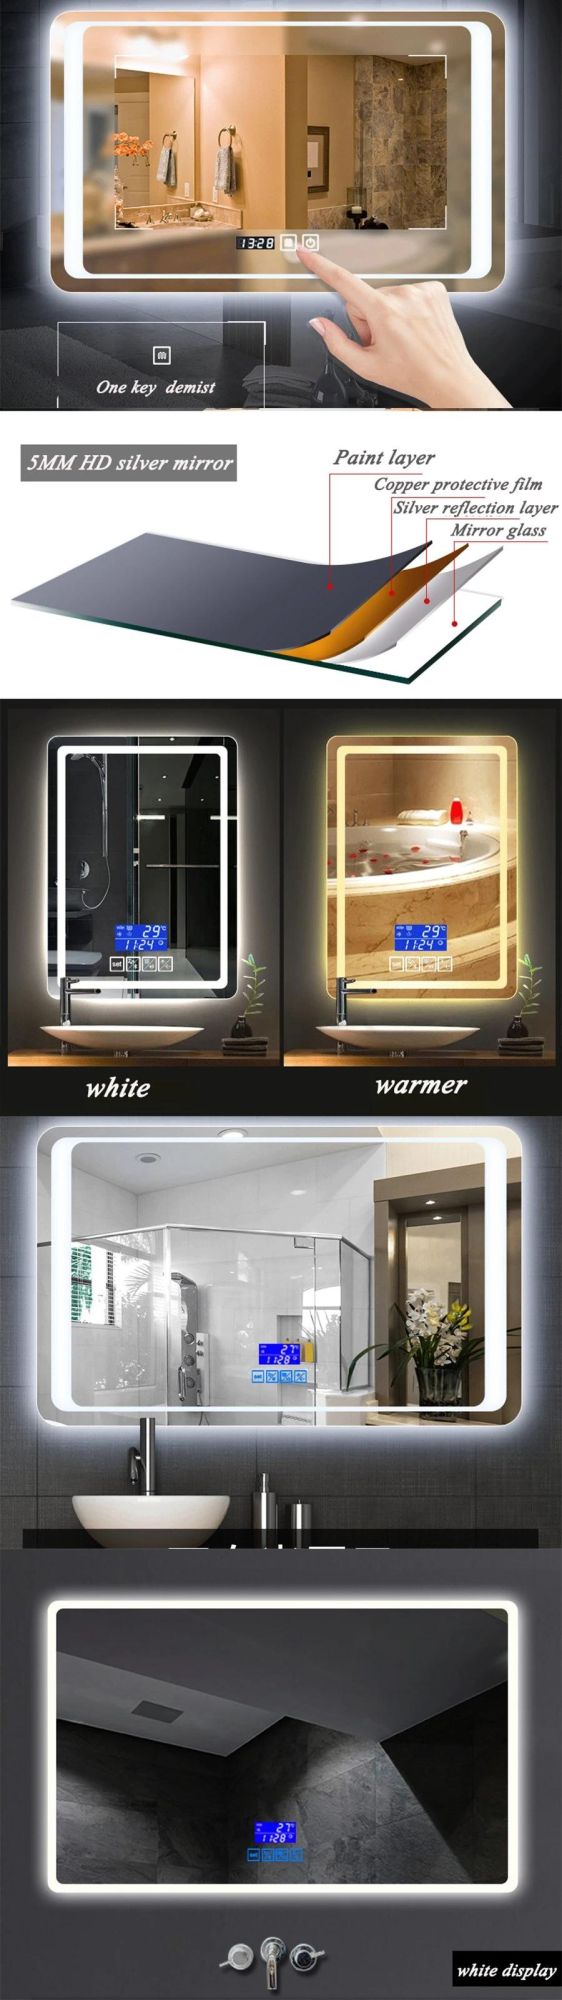 2018 New Morden Bathroom Smart Mirror with LED Bg-008